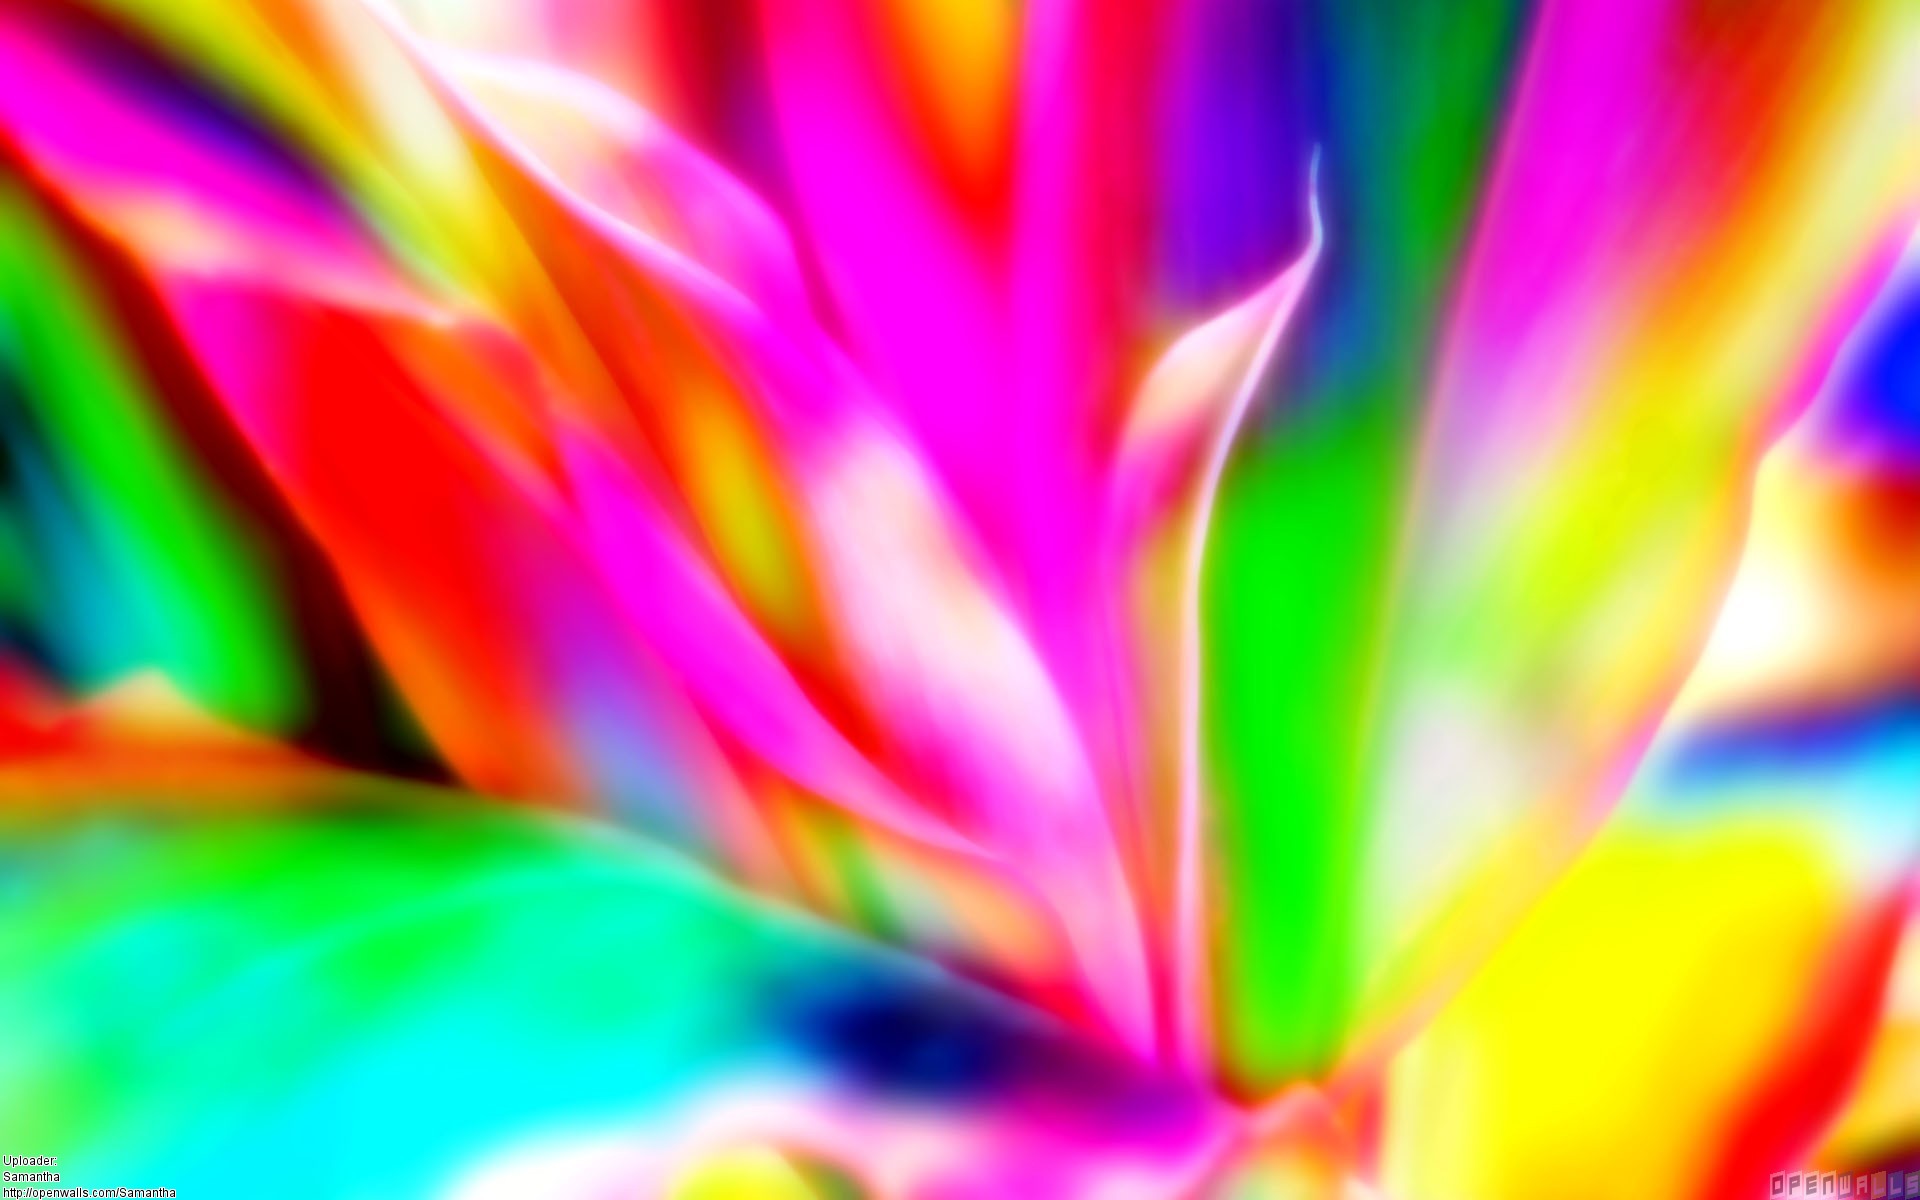 74+] Colorful Background Images - WallpaperSafari